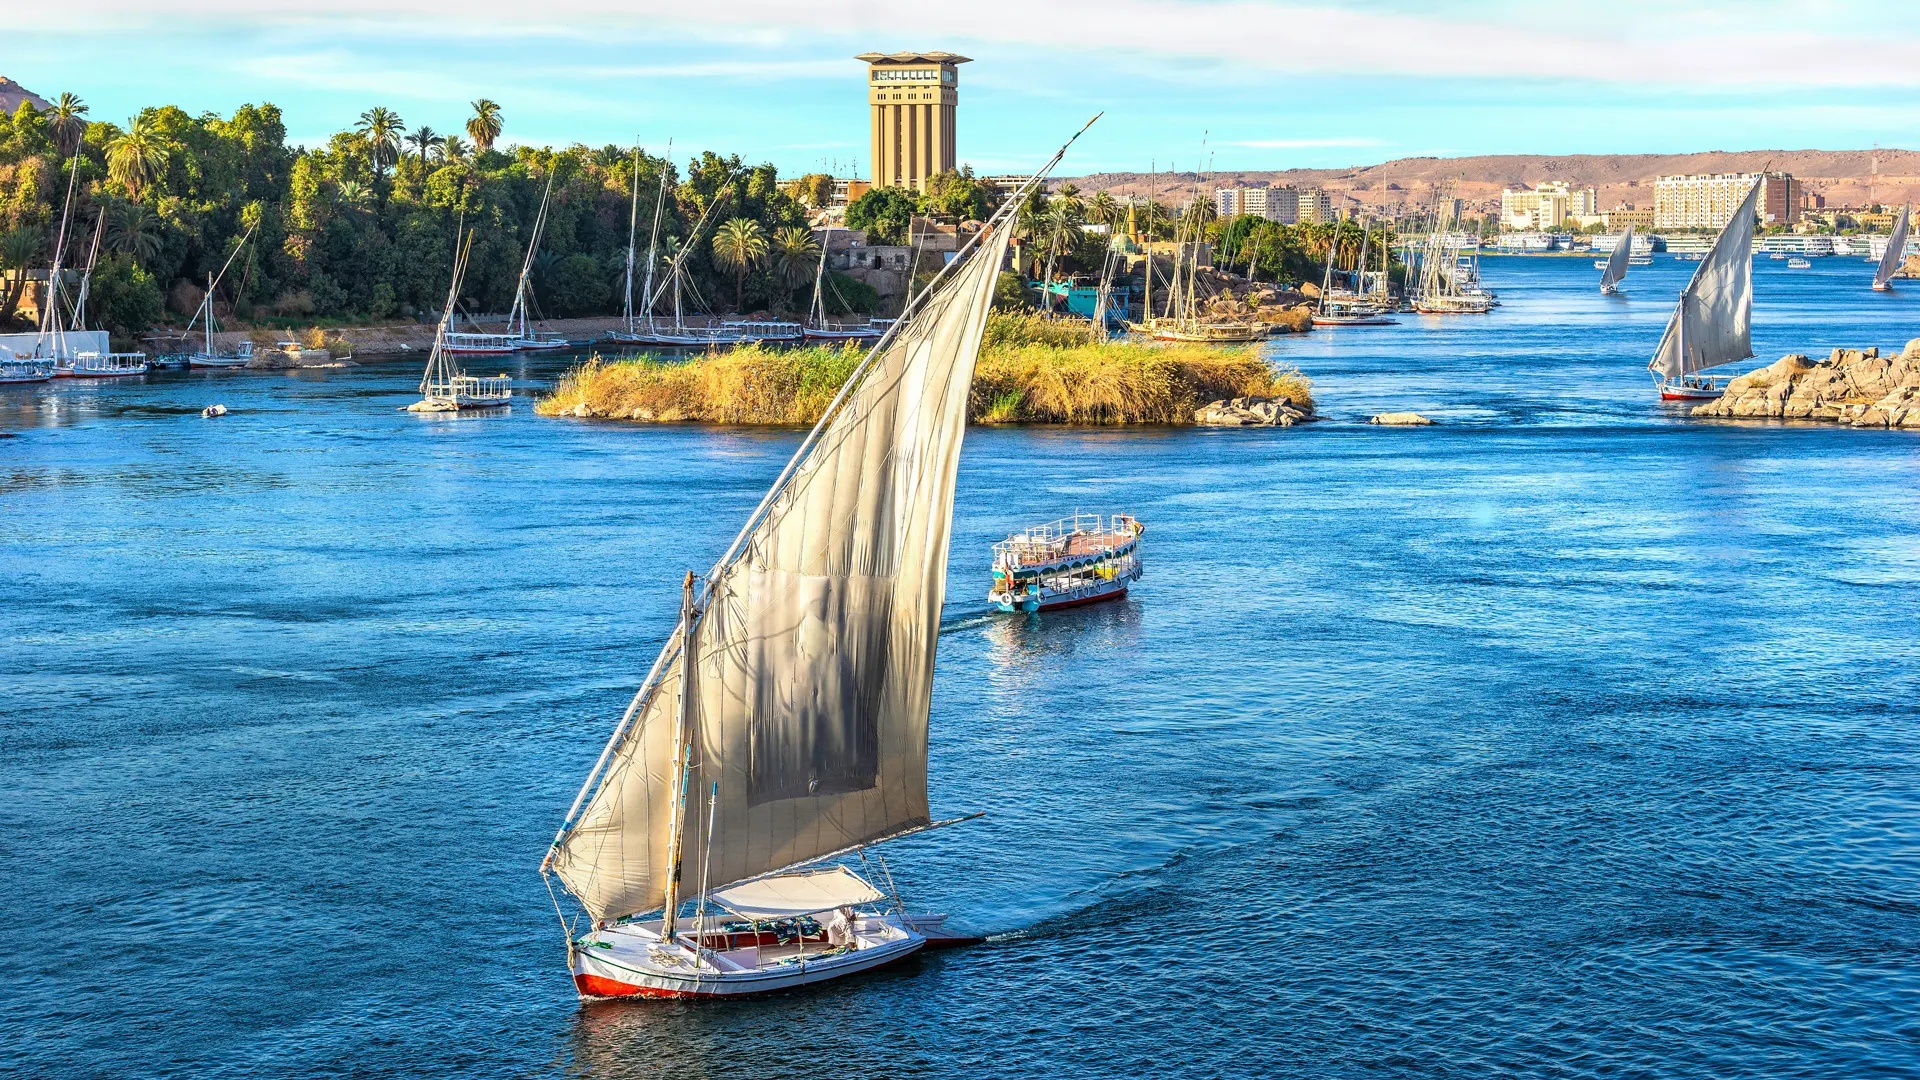 The Aswan